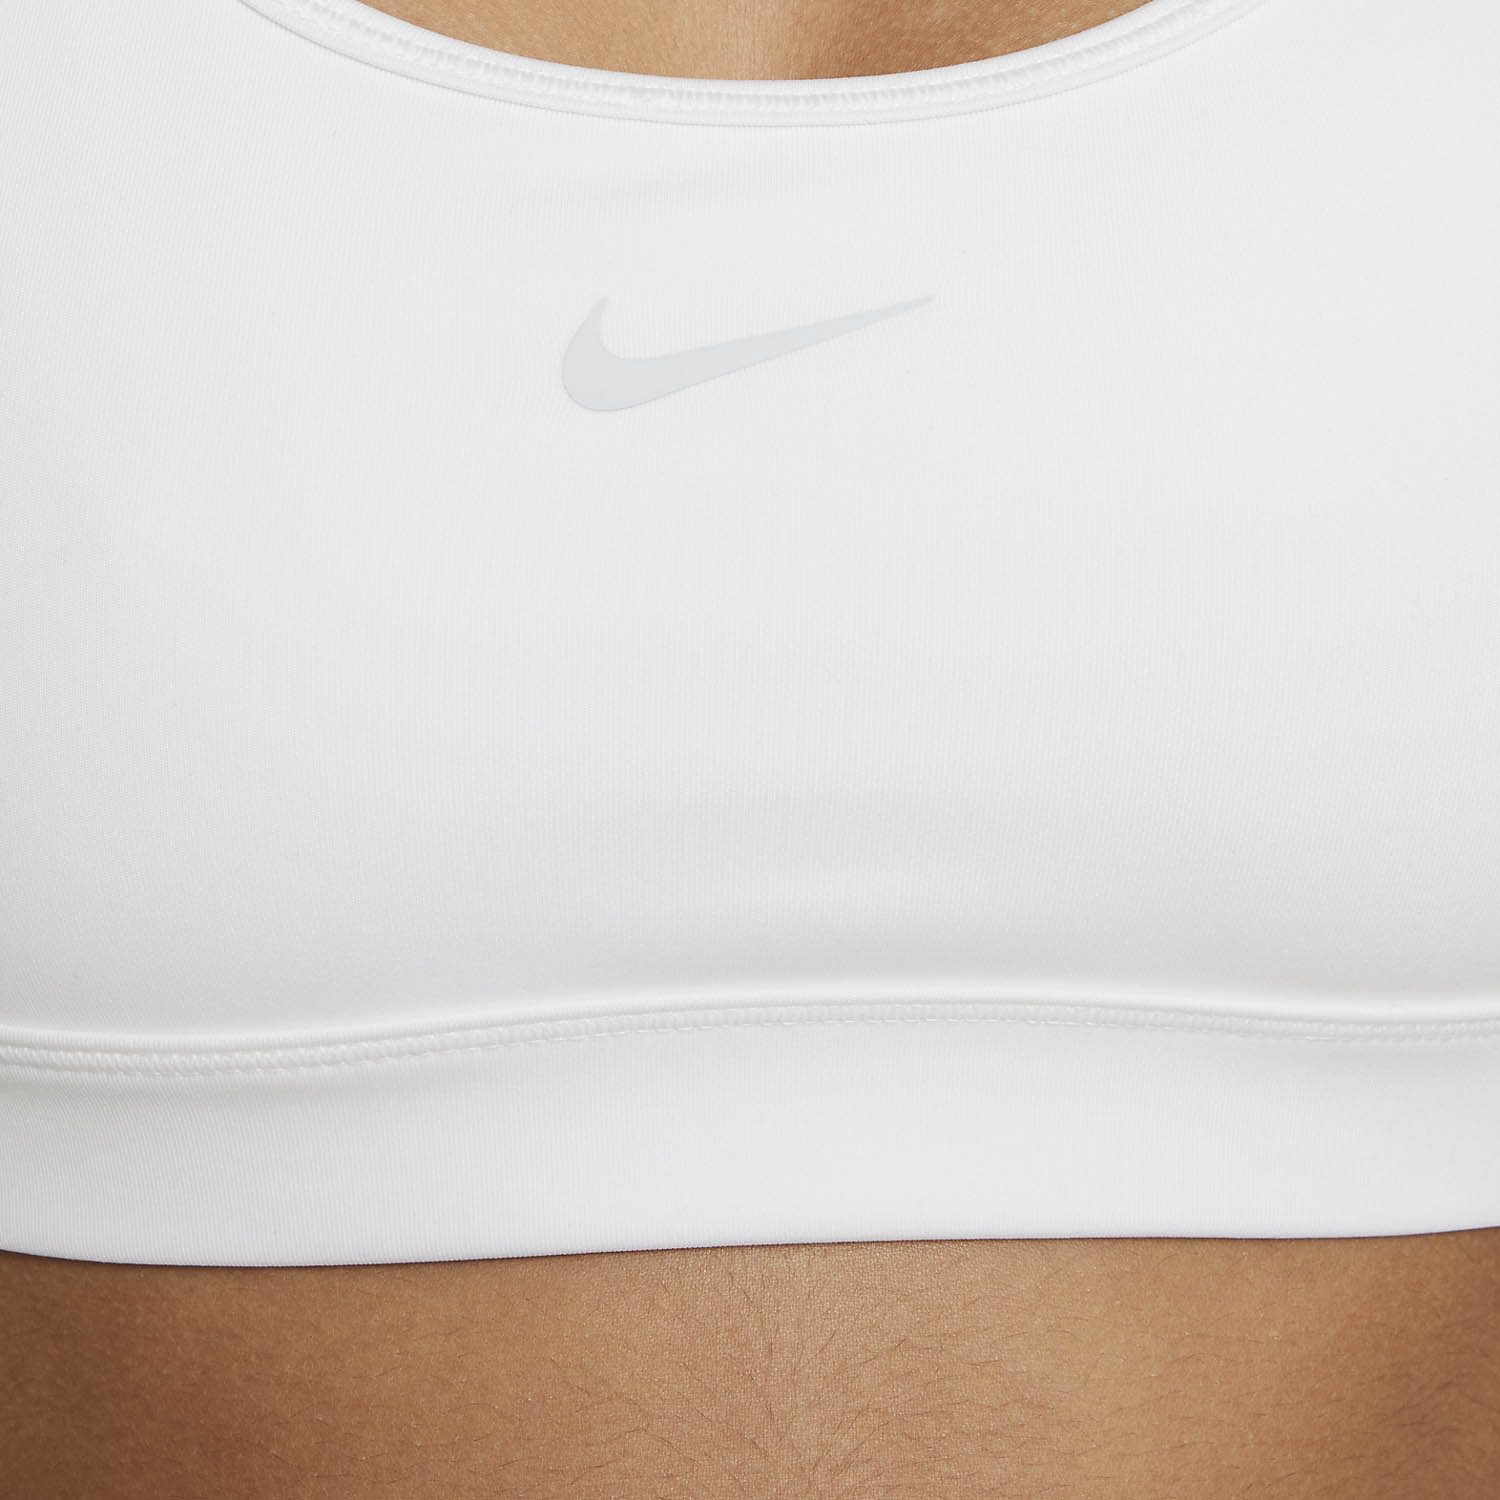 Nike Swoosh Logo Sports Bra Girl - White/Pure Platinum